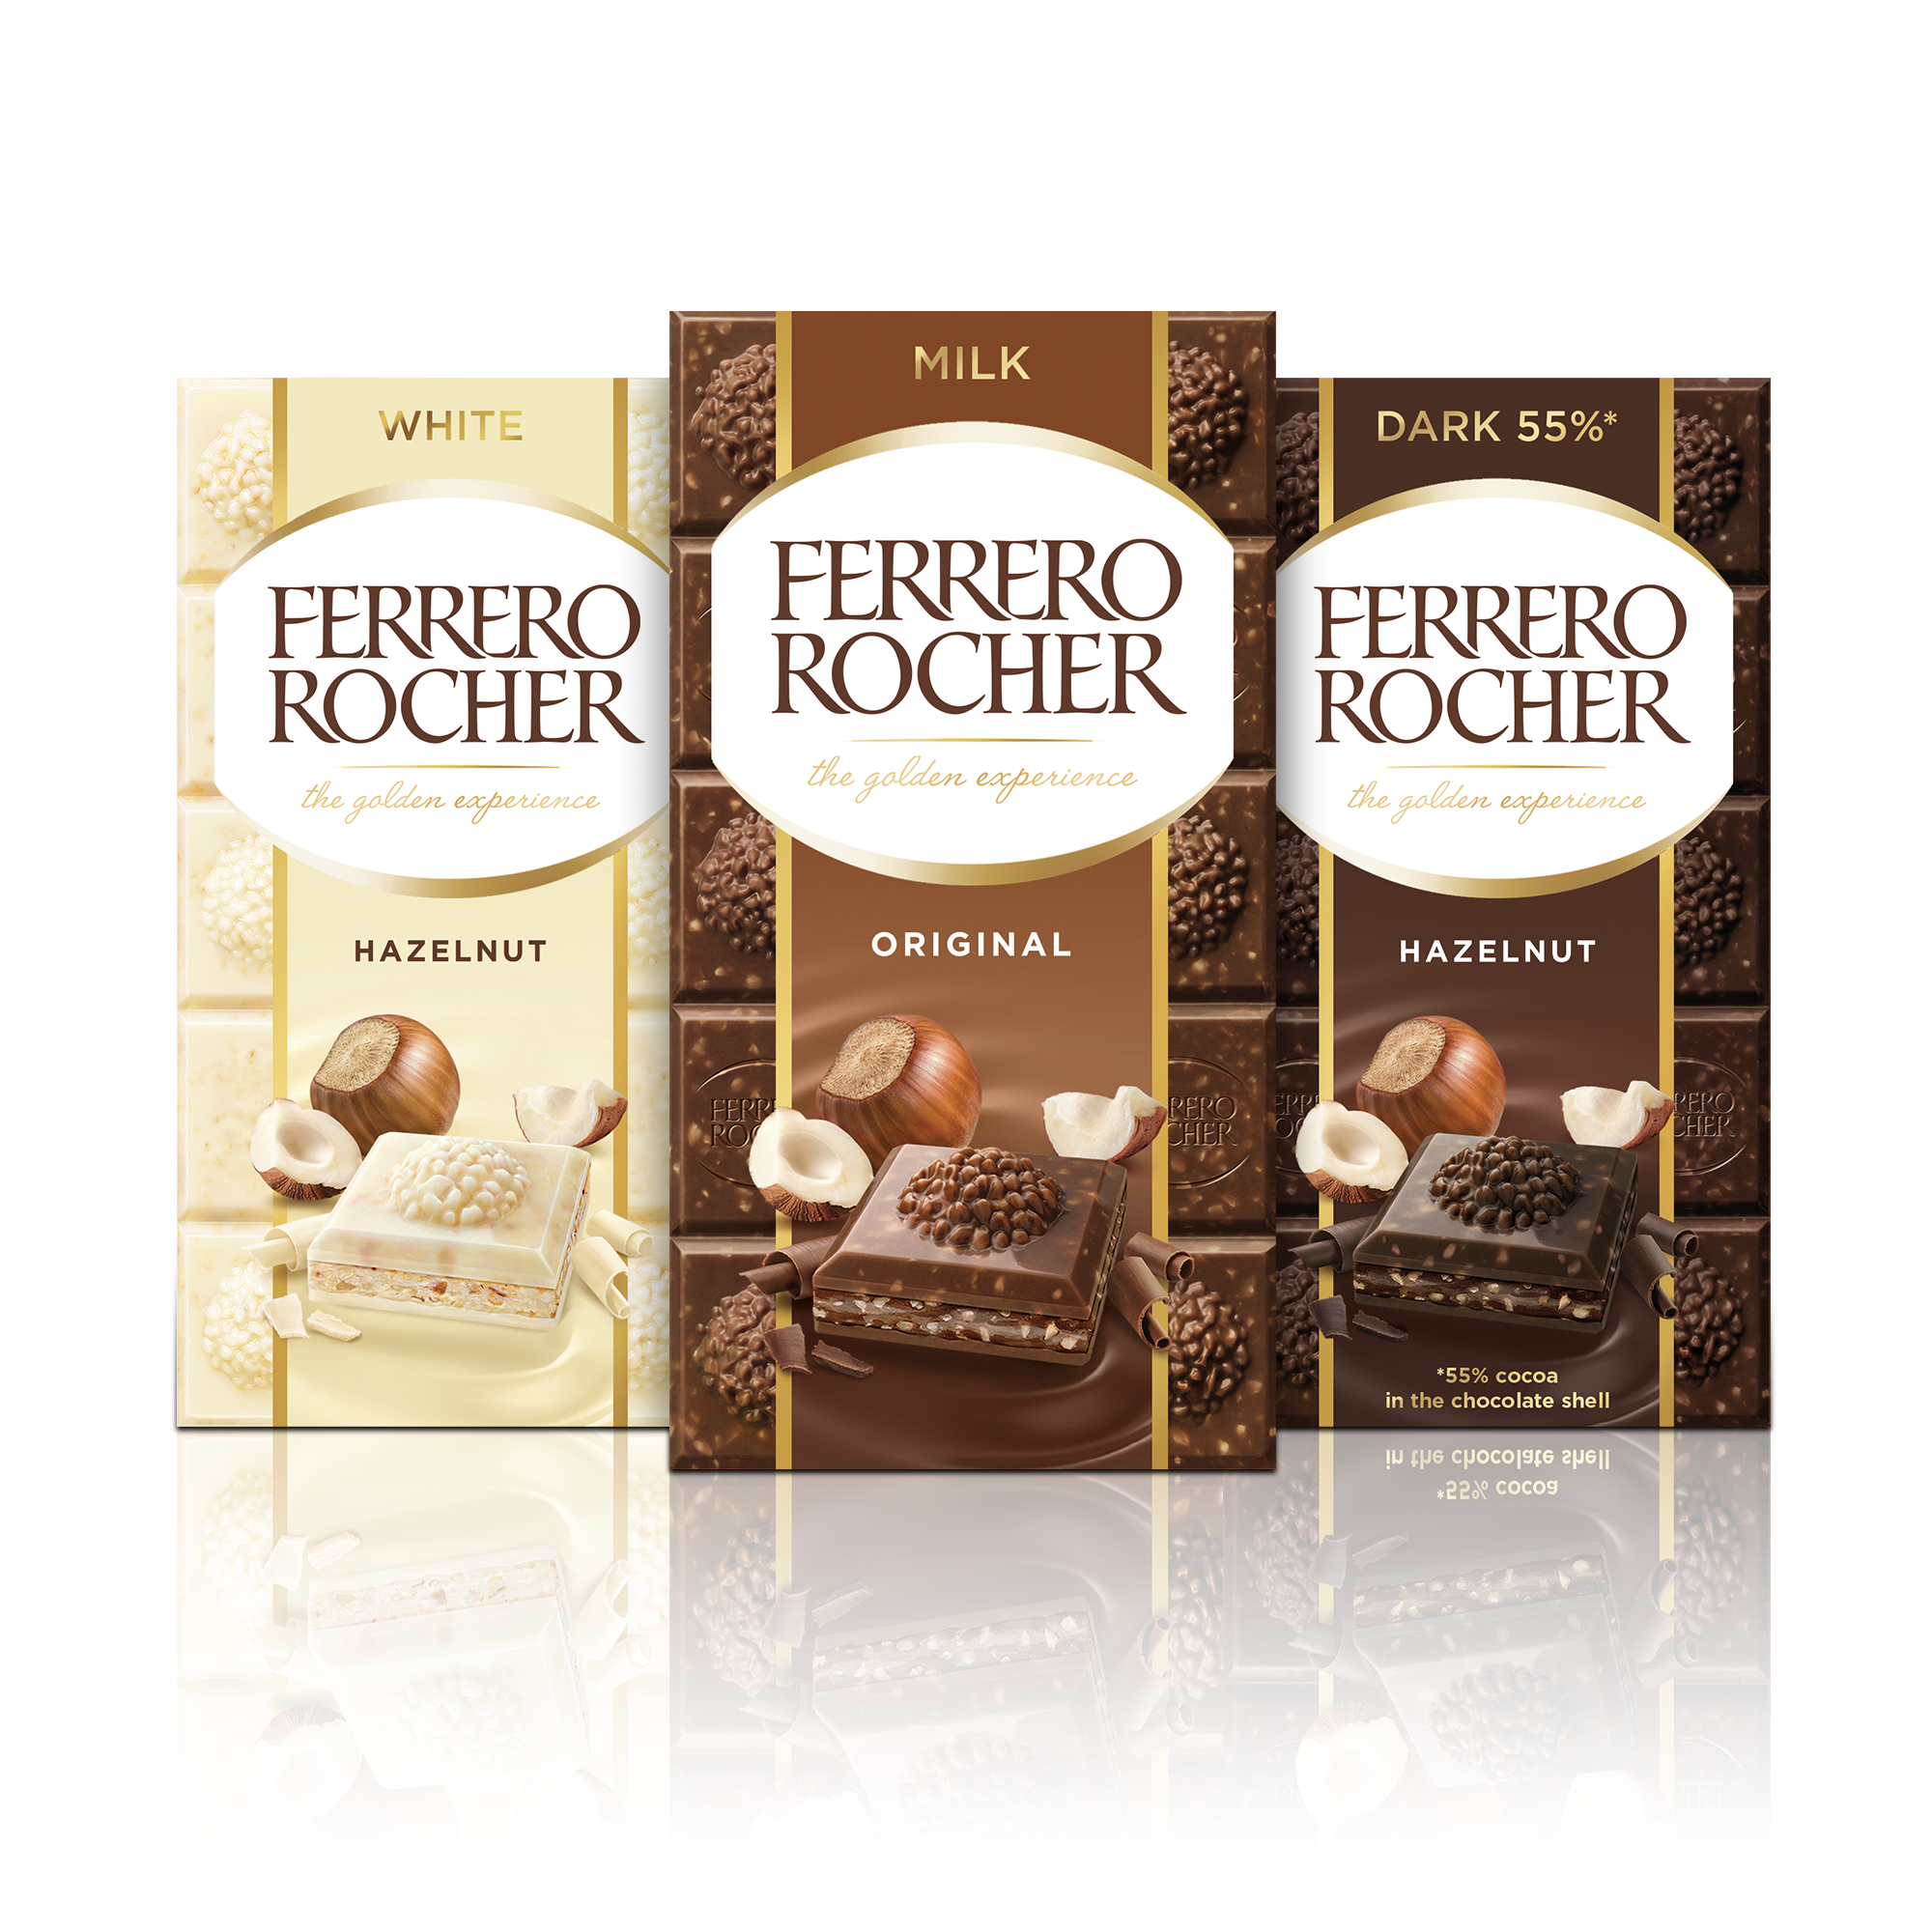 Ferrero relaunches retailer website ‘Your Perfect Store'